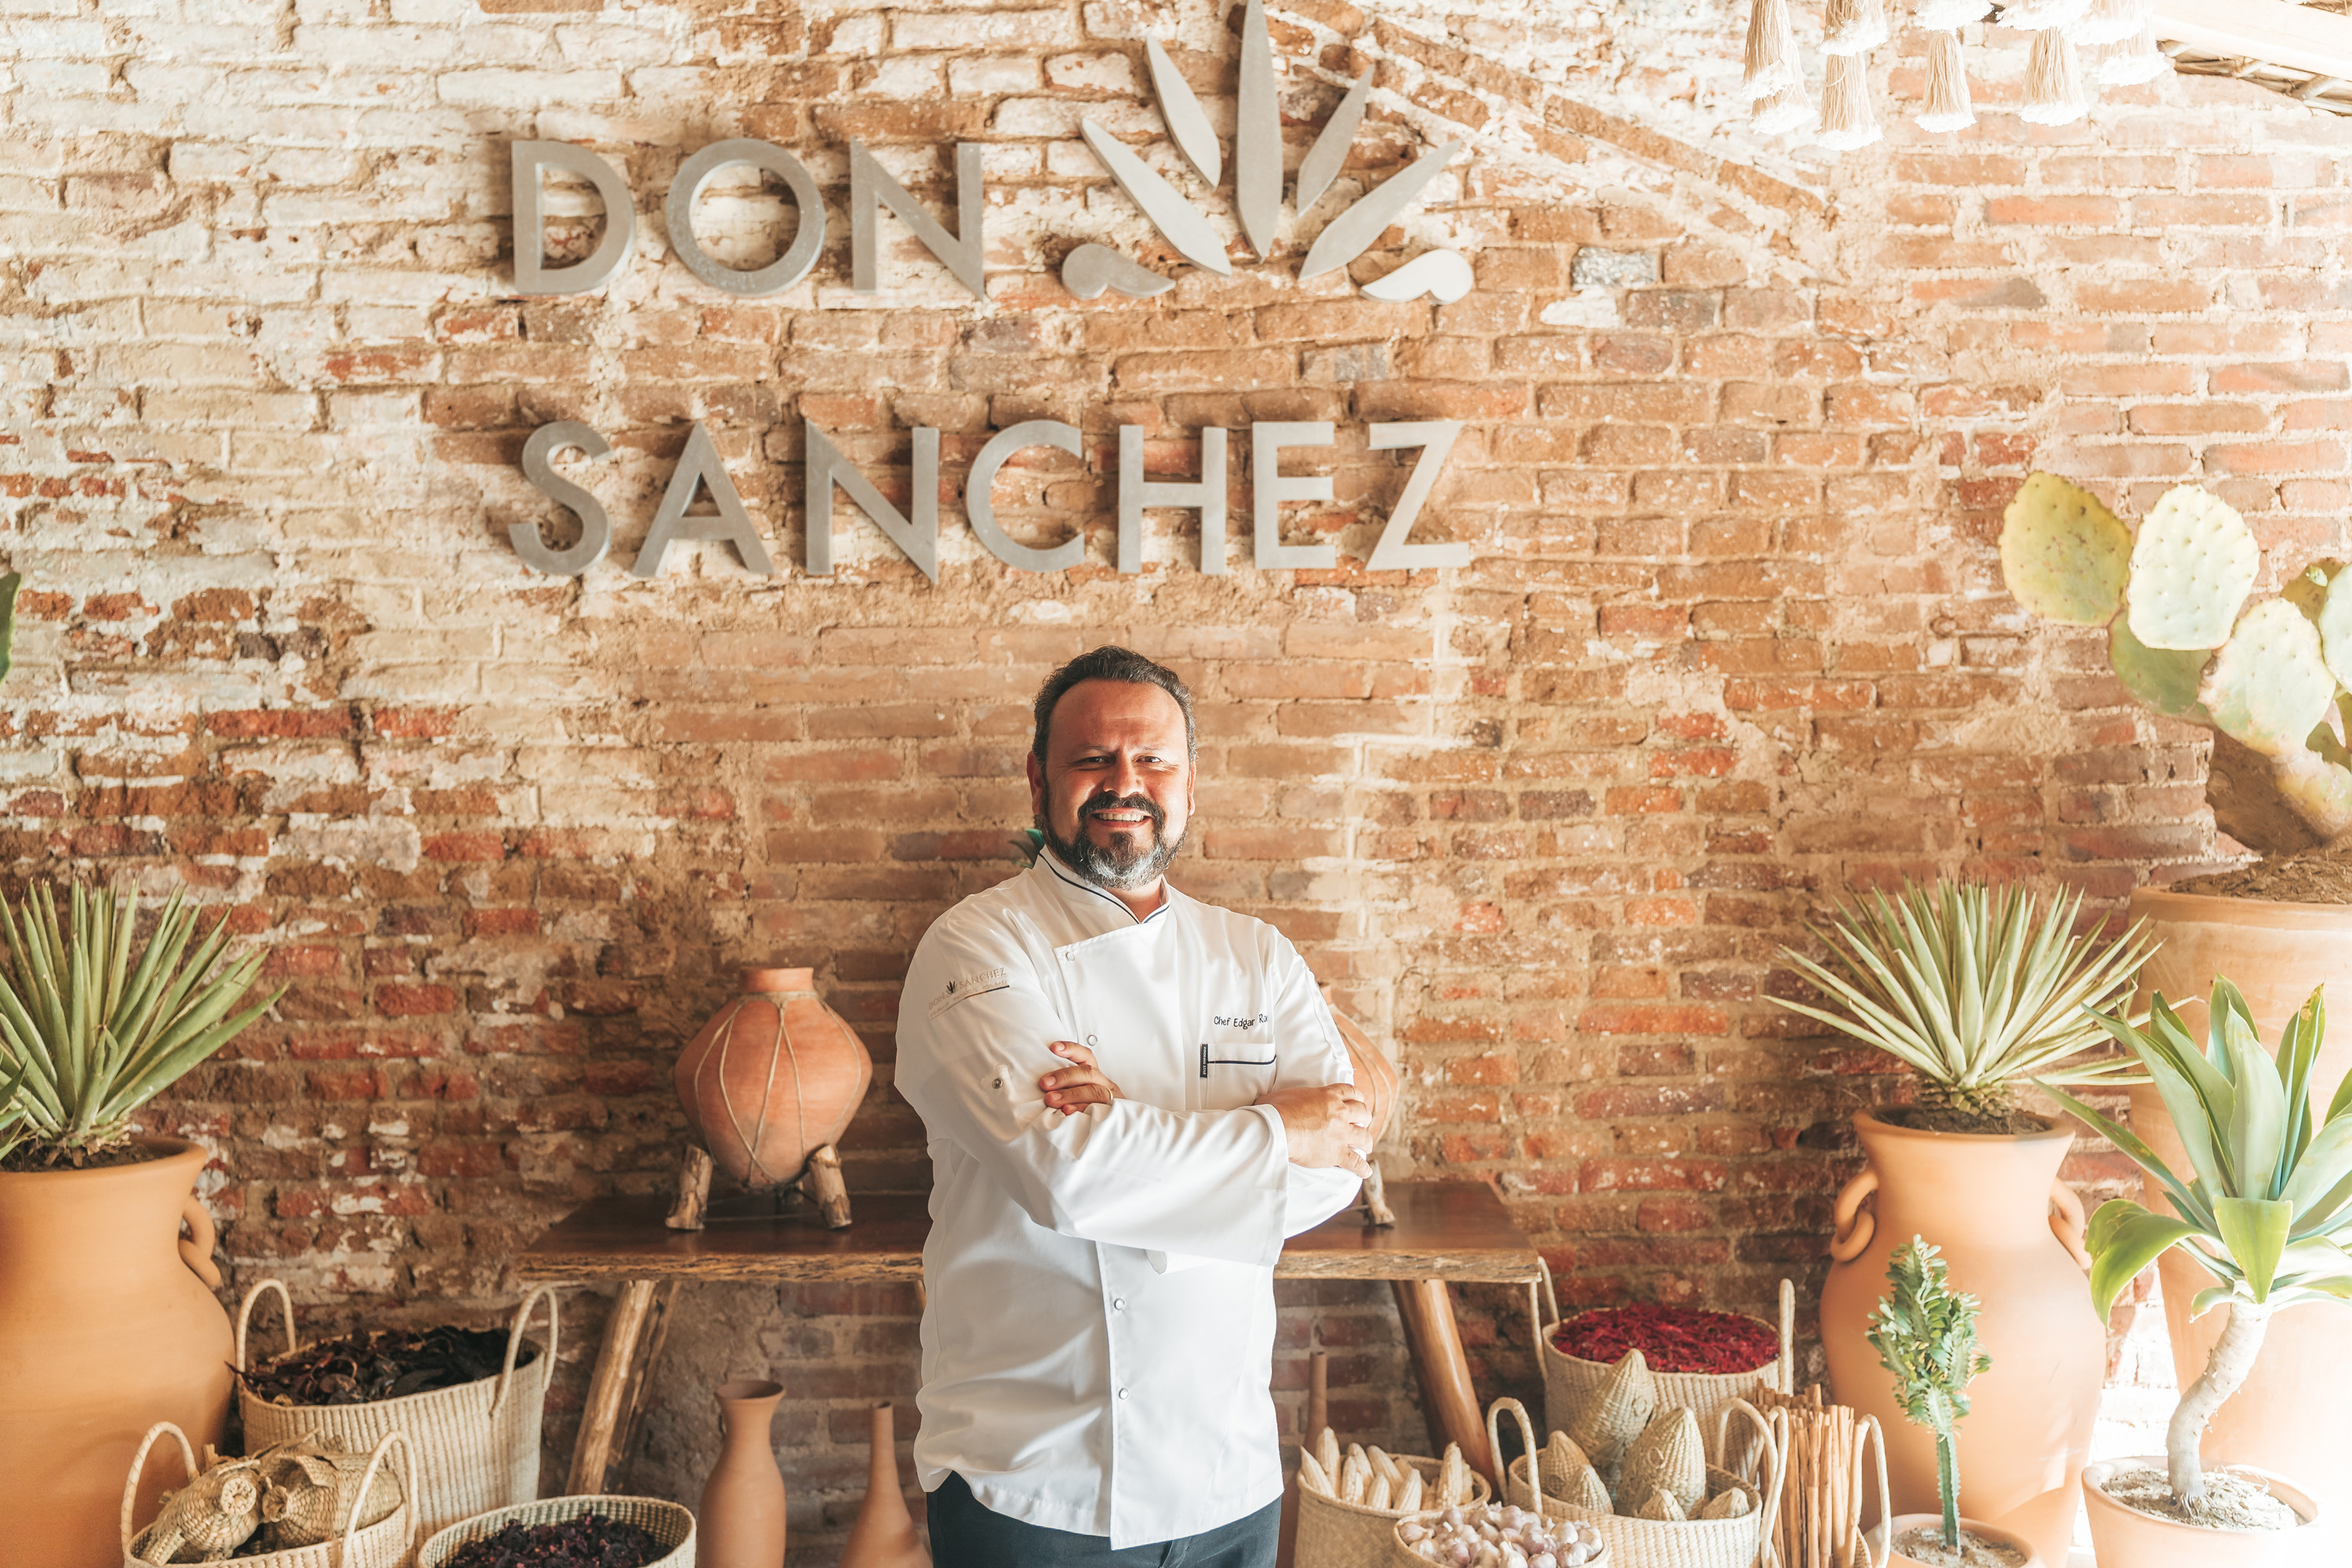 Chef Edgar Roman Don Sanchez fine dining restaurant in San Jose del Cabo Mexico